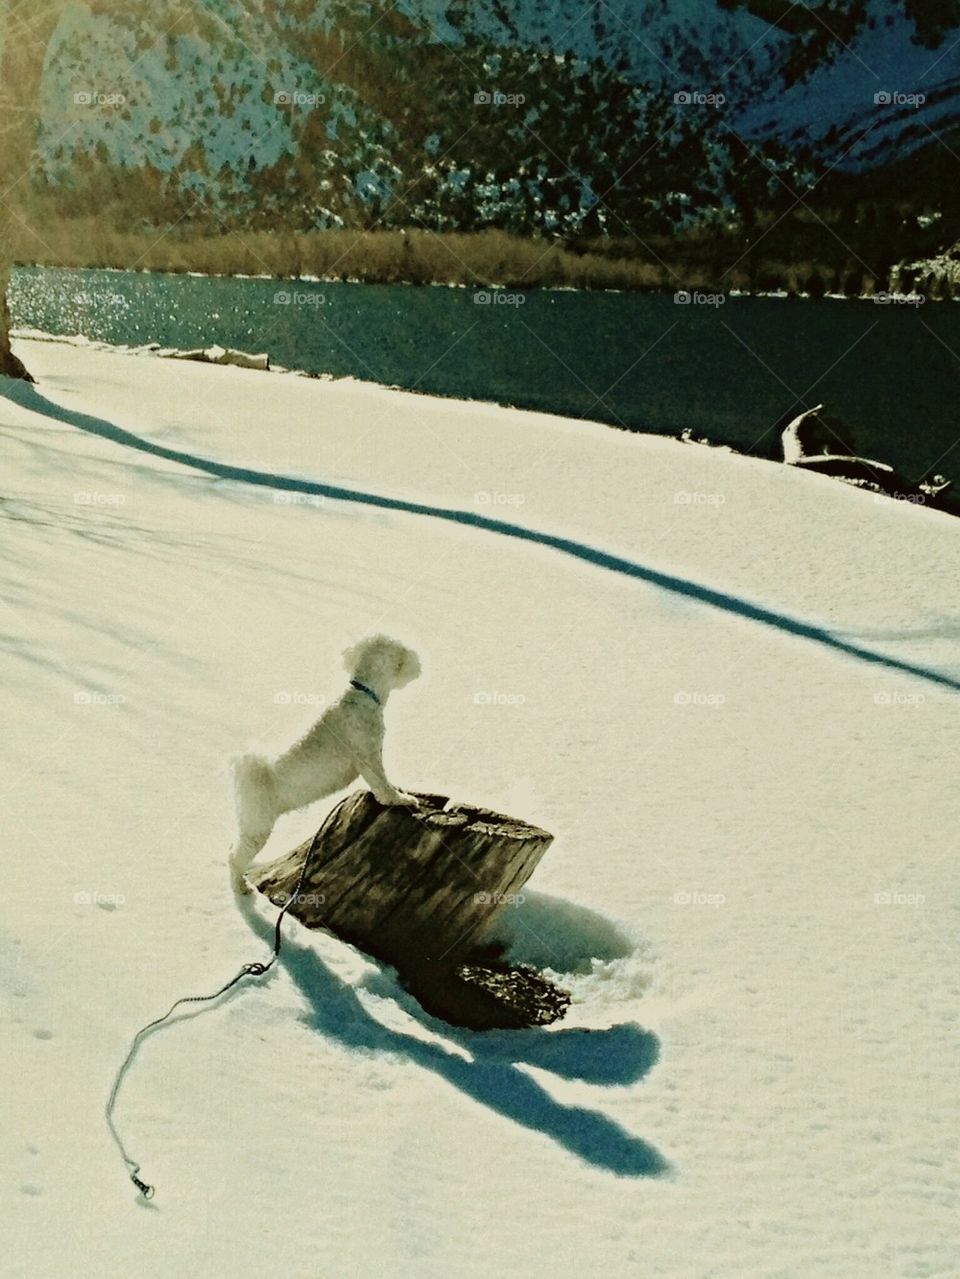 Winter scene frozen water white dog on leash